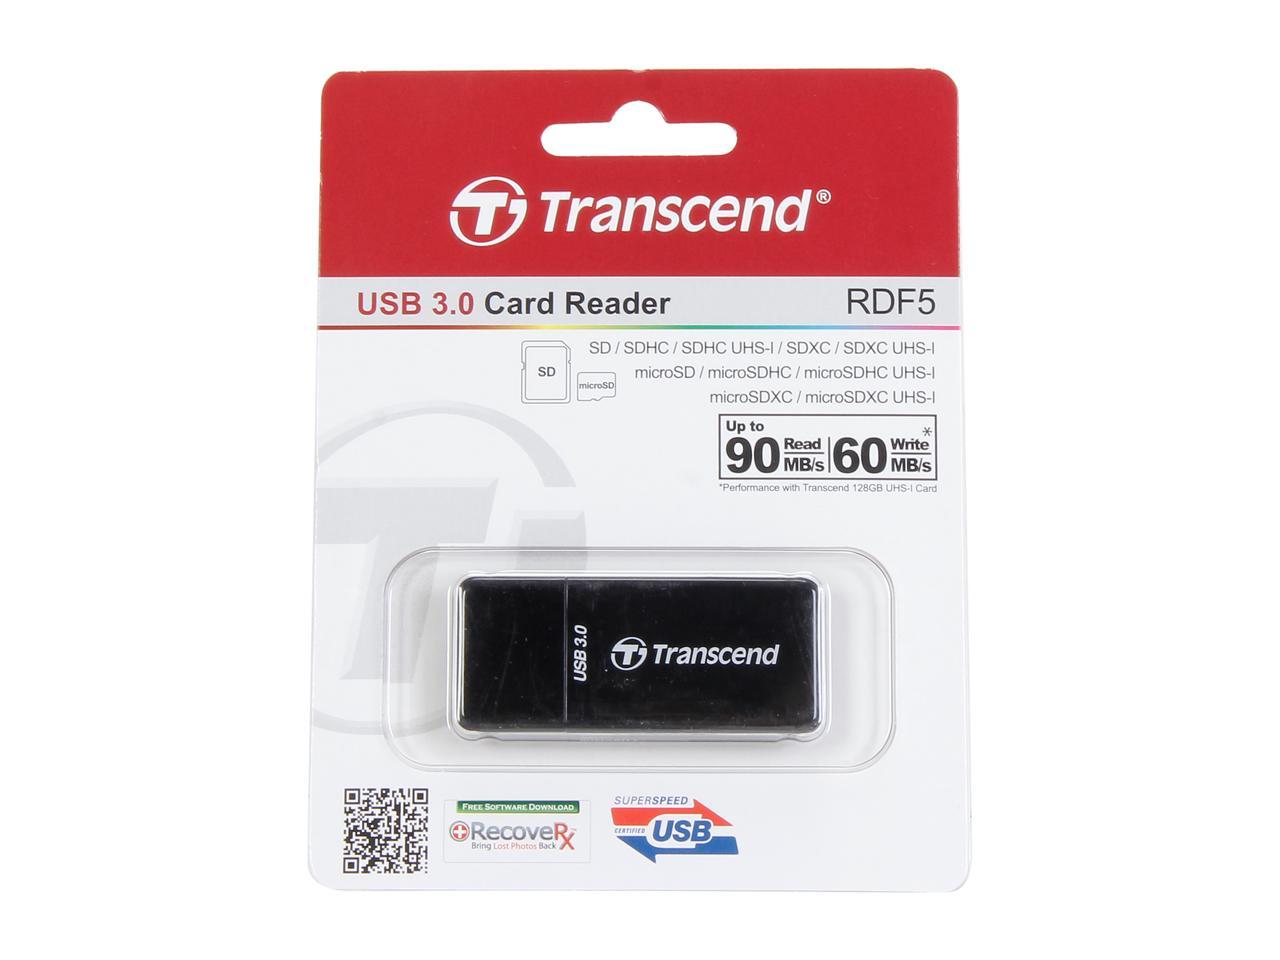 Transcend TS-RDF5K USB 3.0 Support SDHC (UHS-I), SDXC (UHS-I), microSD, microSDHC (UHS-I), and microSDXC (UHS-I) Flash Card Reader - image 5 of 6